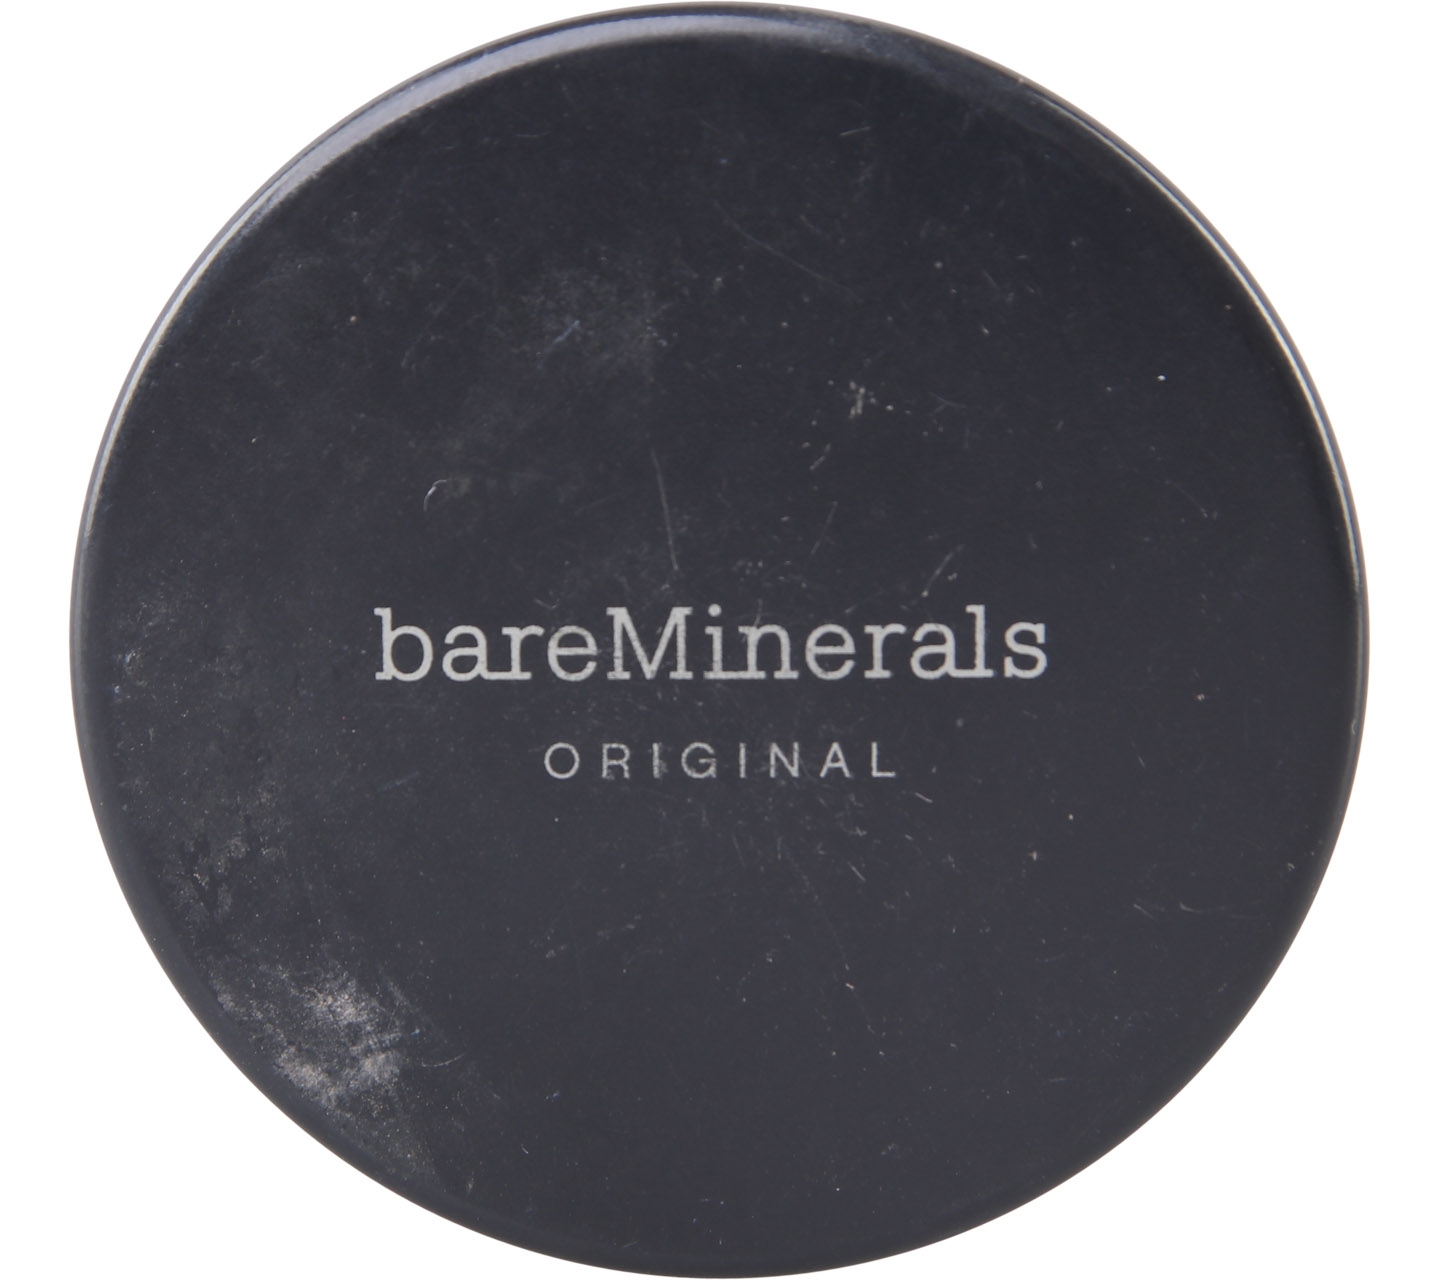 Bare Minerals Medium Tan foundation Faces